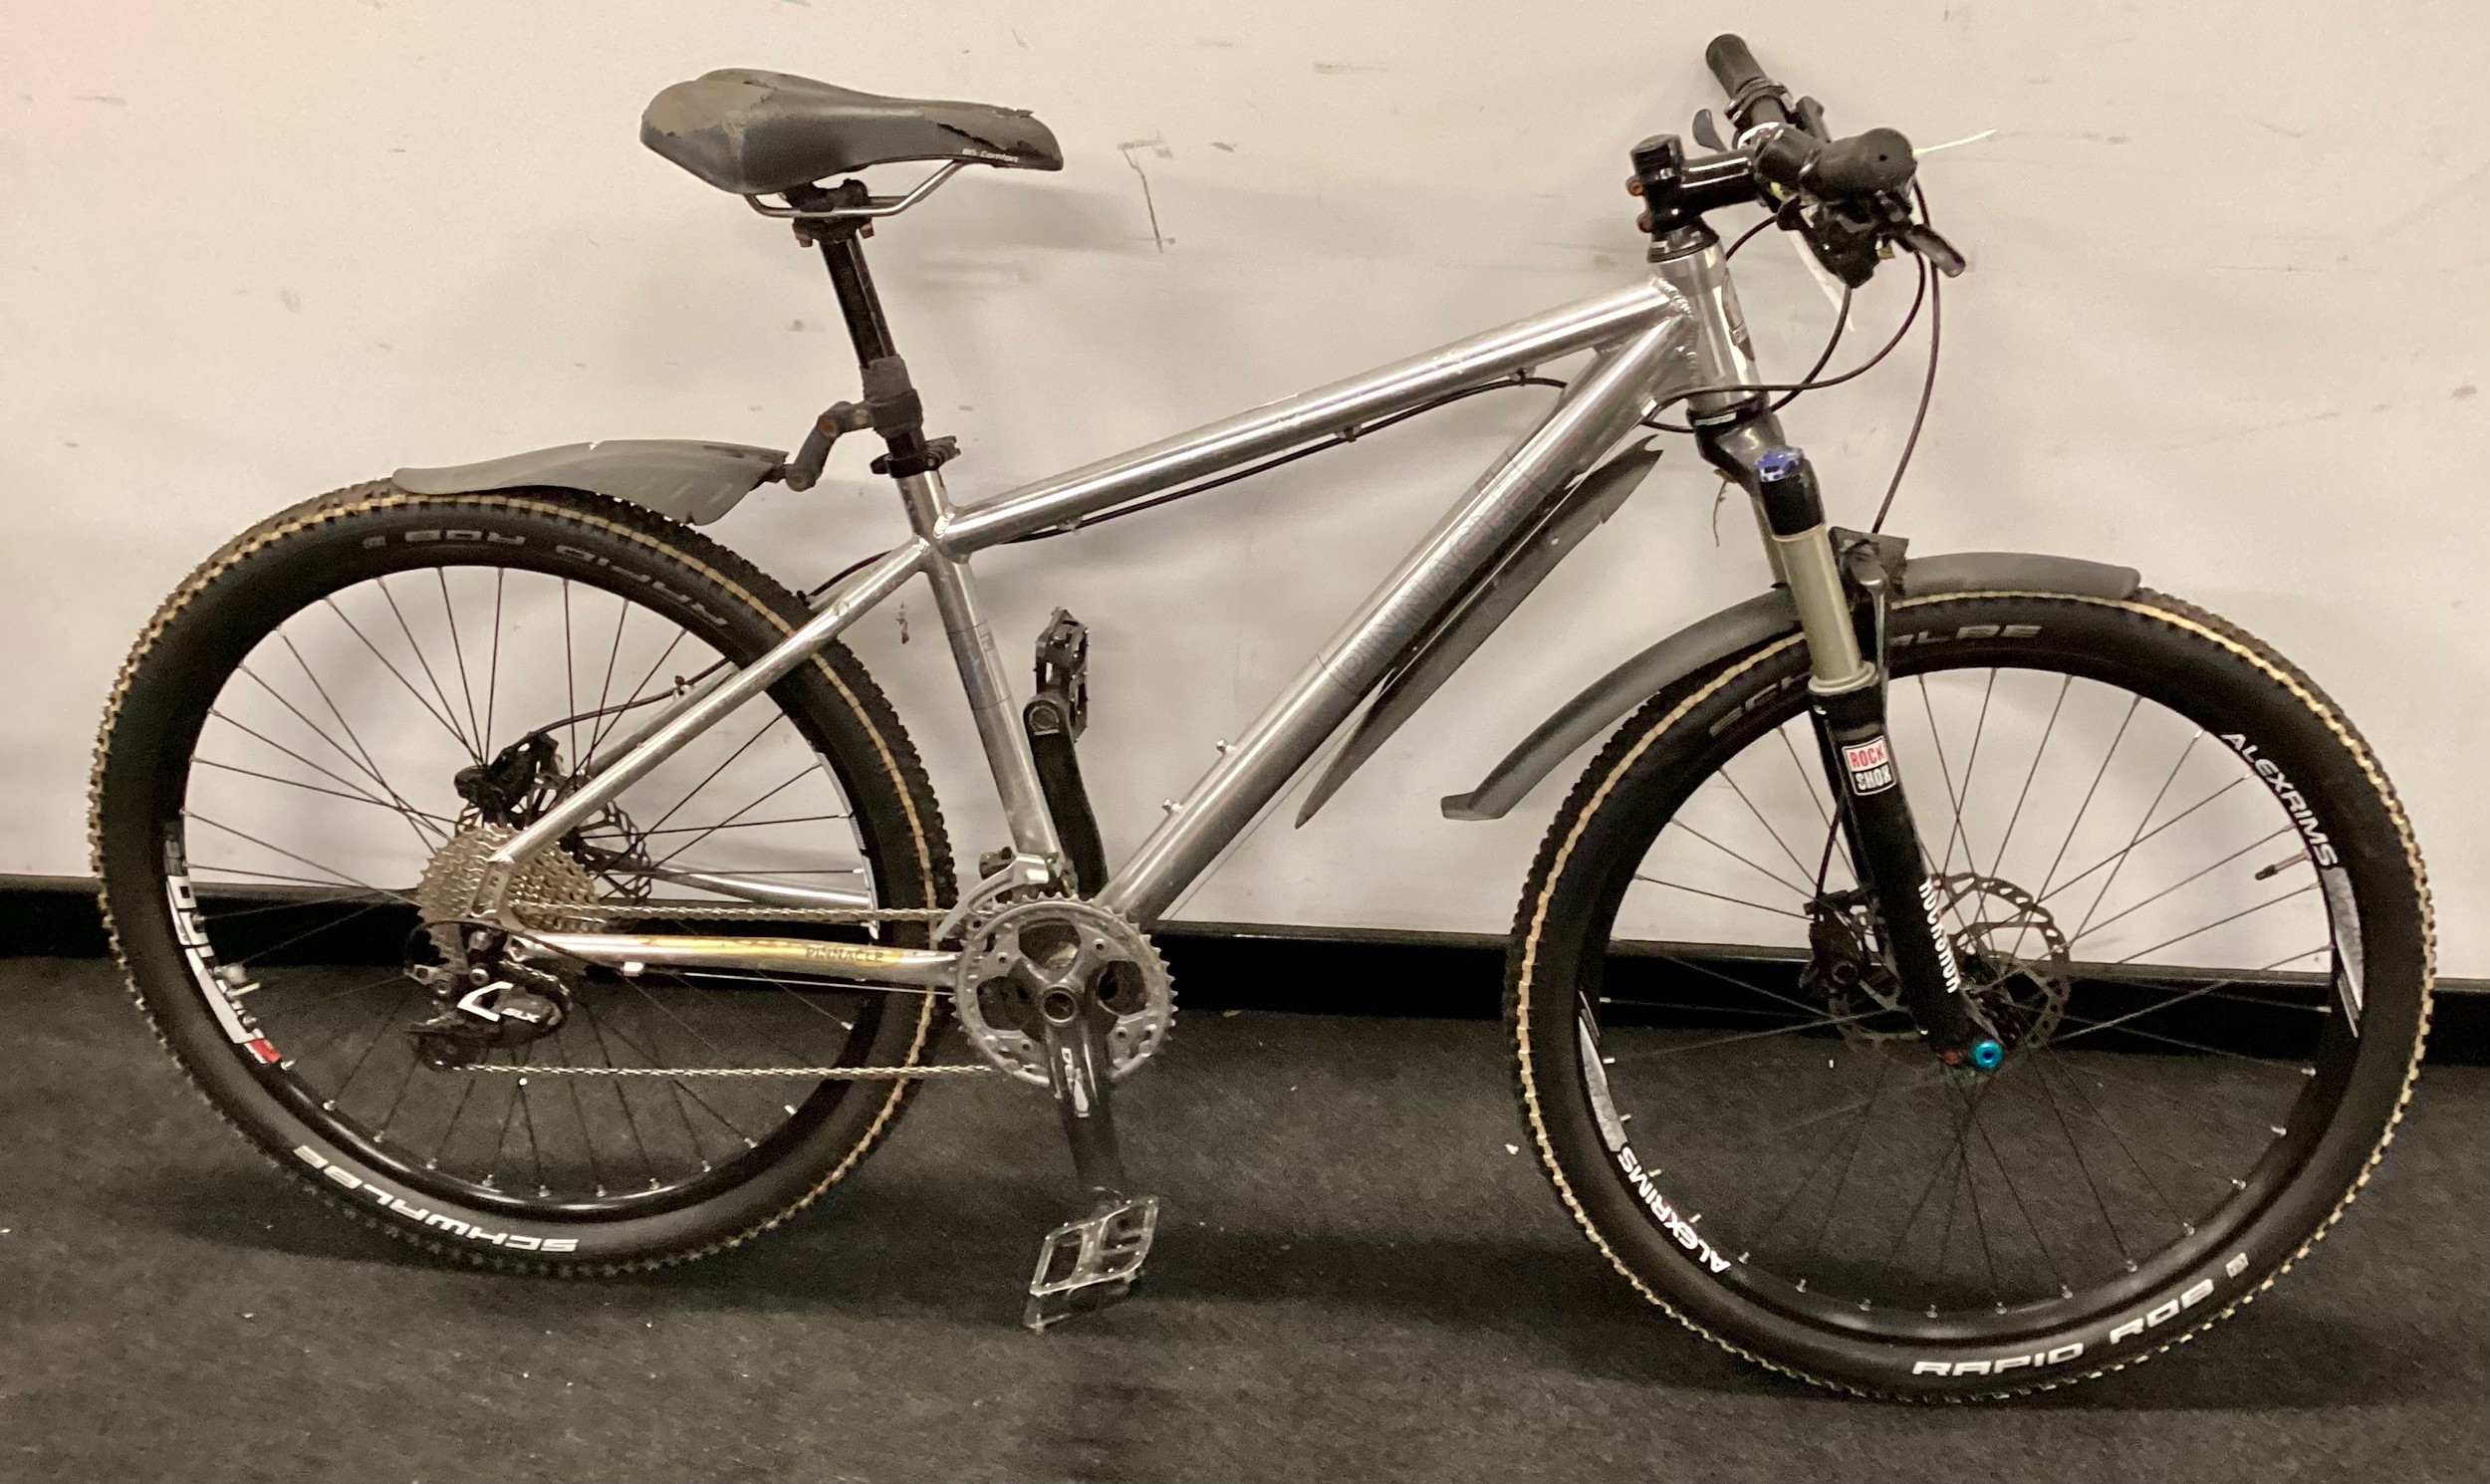 Silver Pinnacle mountain bike 30 gears 16" frame size 26" wheel size (REF 16B).